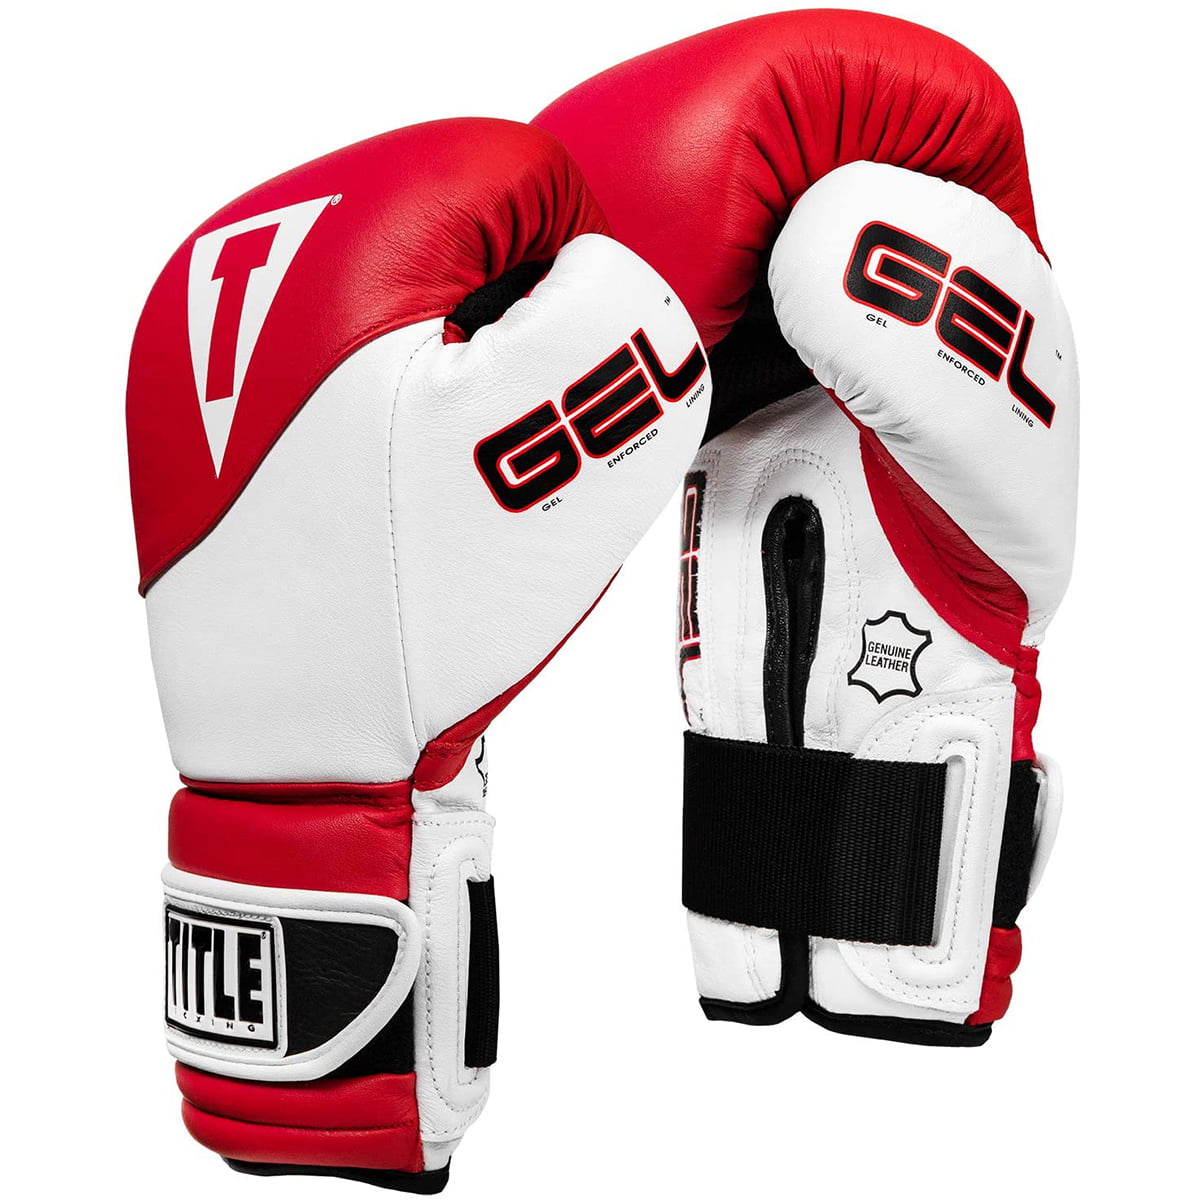 Боксерские перчатки title Gel Suspense. Everlast перчатки красно белые.. Перчатки 18 унций. Перчатки 14 унций.